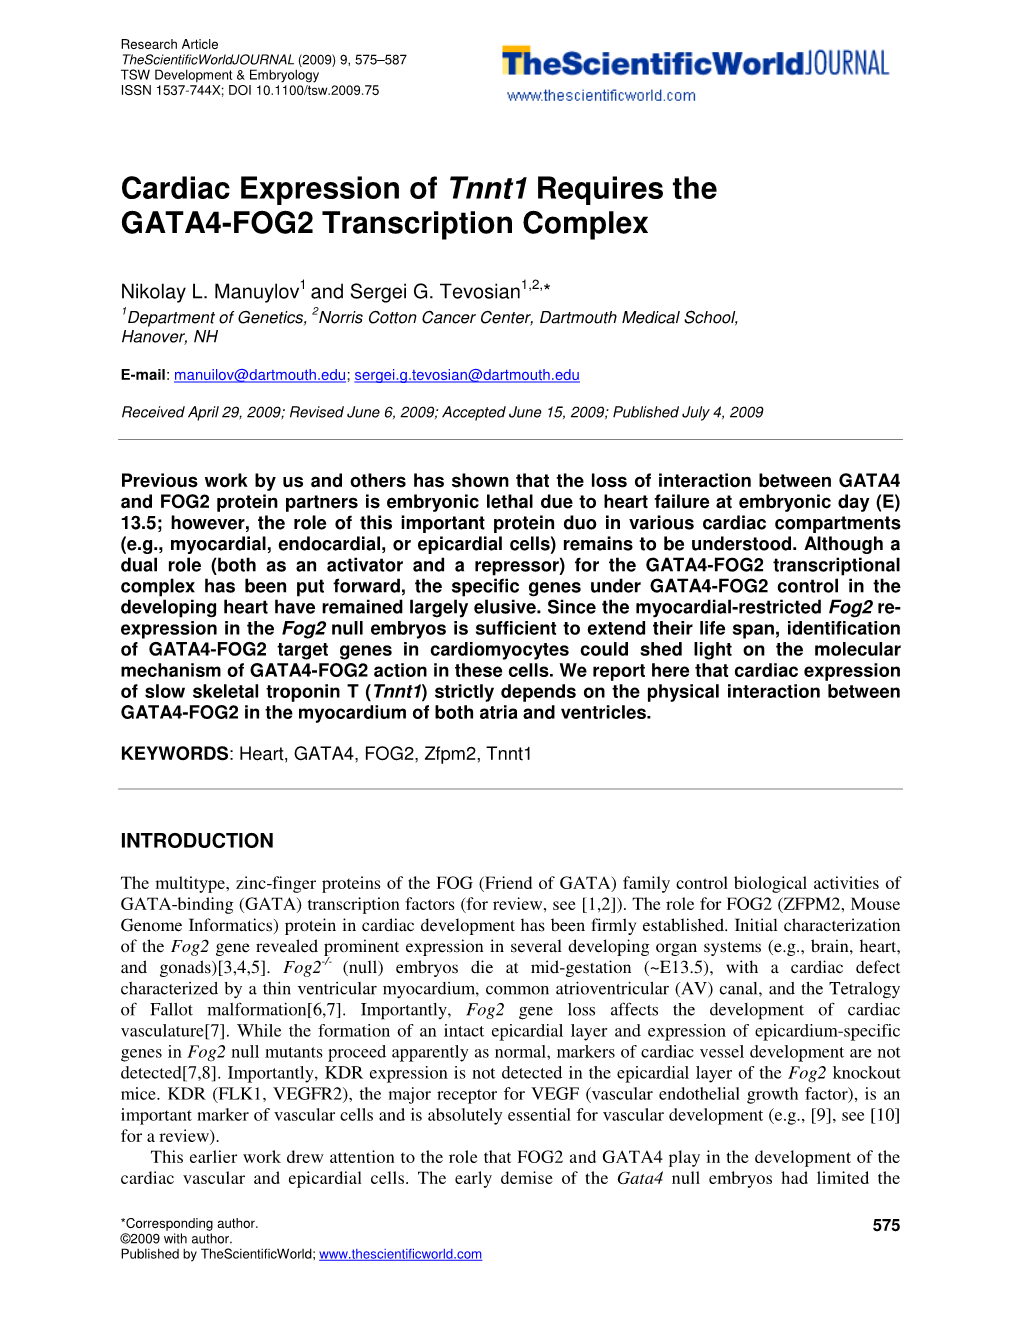 Cardiac Expression of Tnnt1 Requires the GATA4-FOG2 Transcription Complex